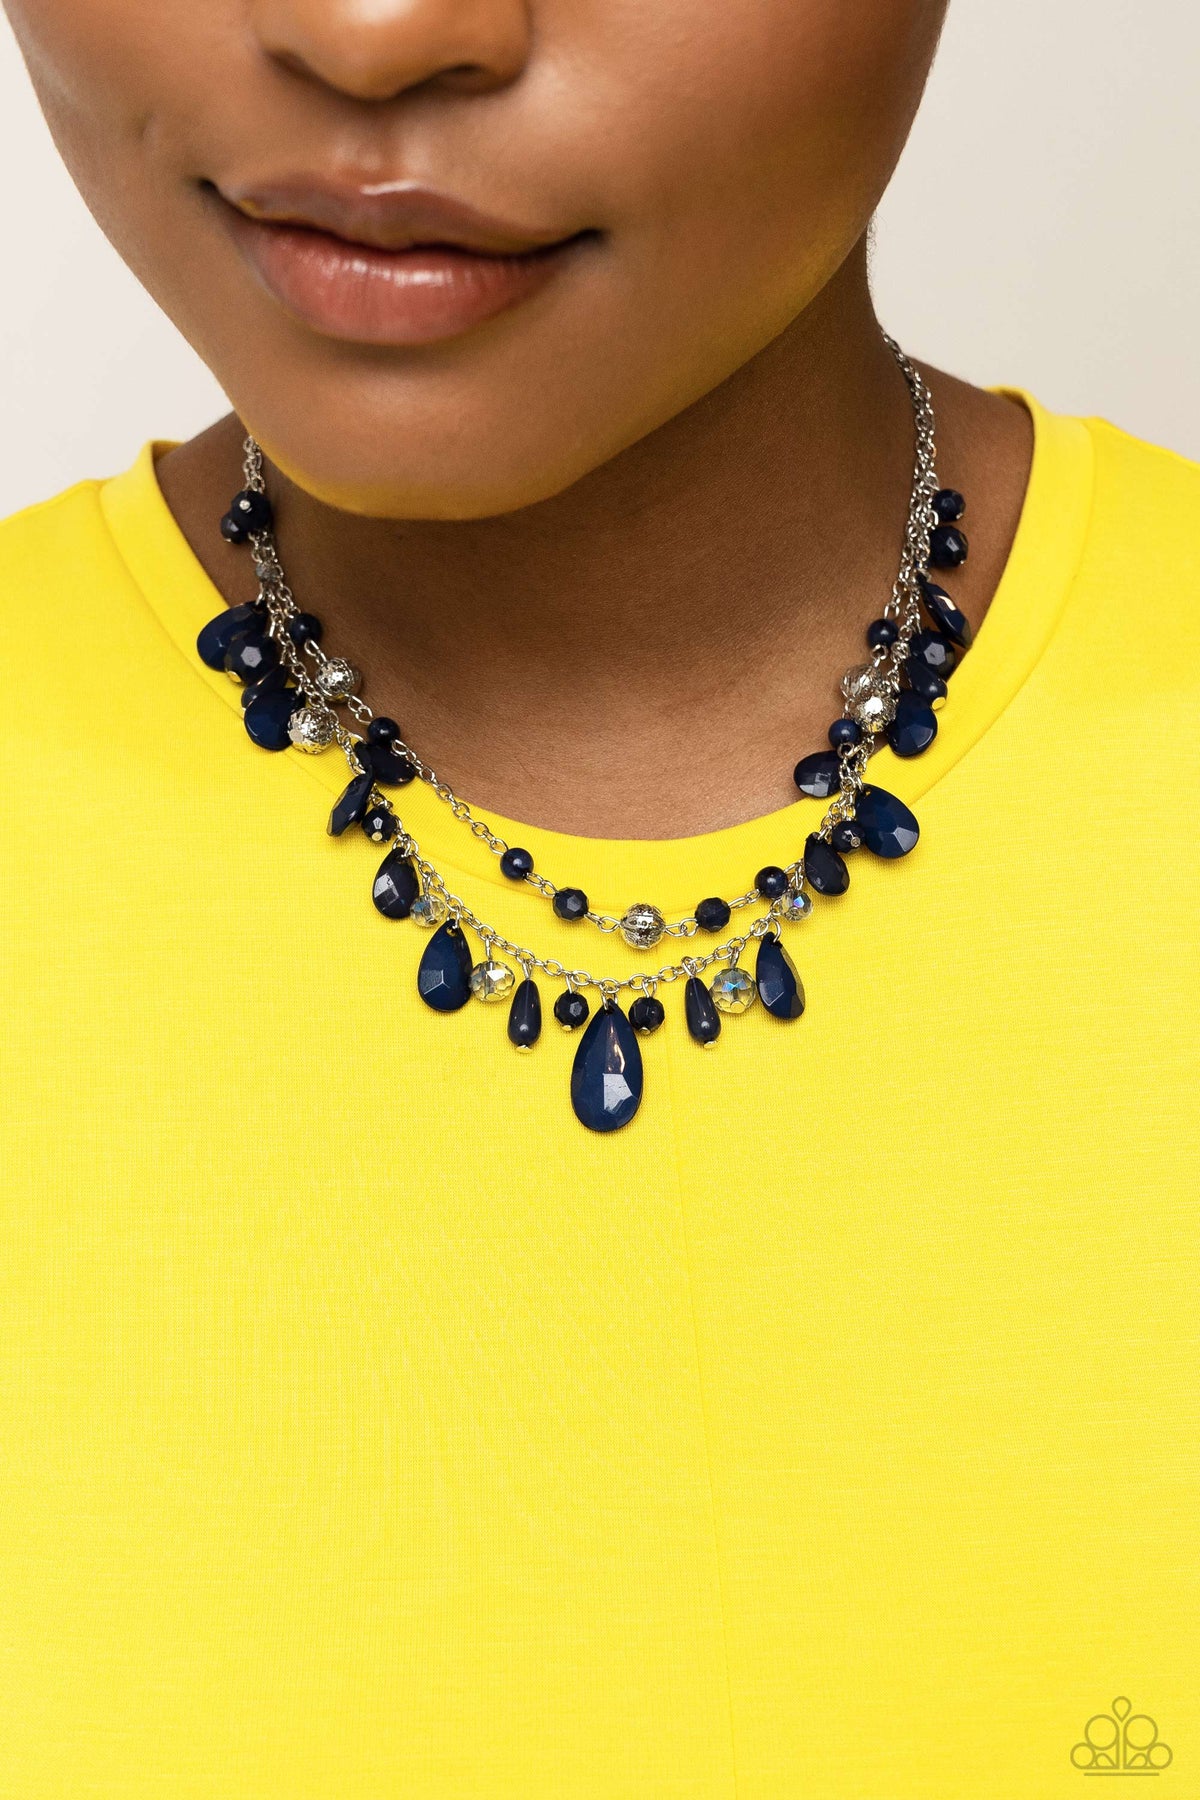 Flirty Flood Blue Necklace - Paparazzi Accessories-on model - CarasShop.com - $5 Jewelry by Cara Jewels